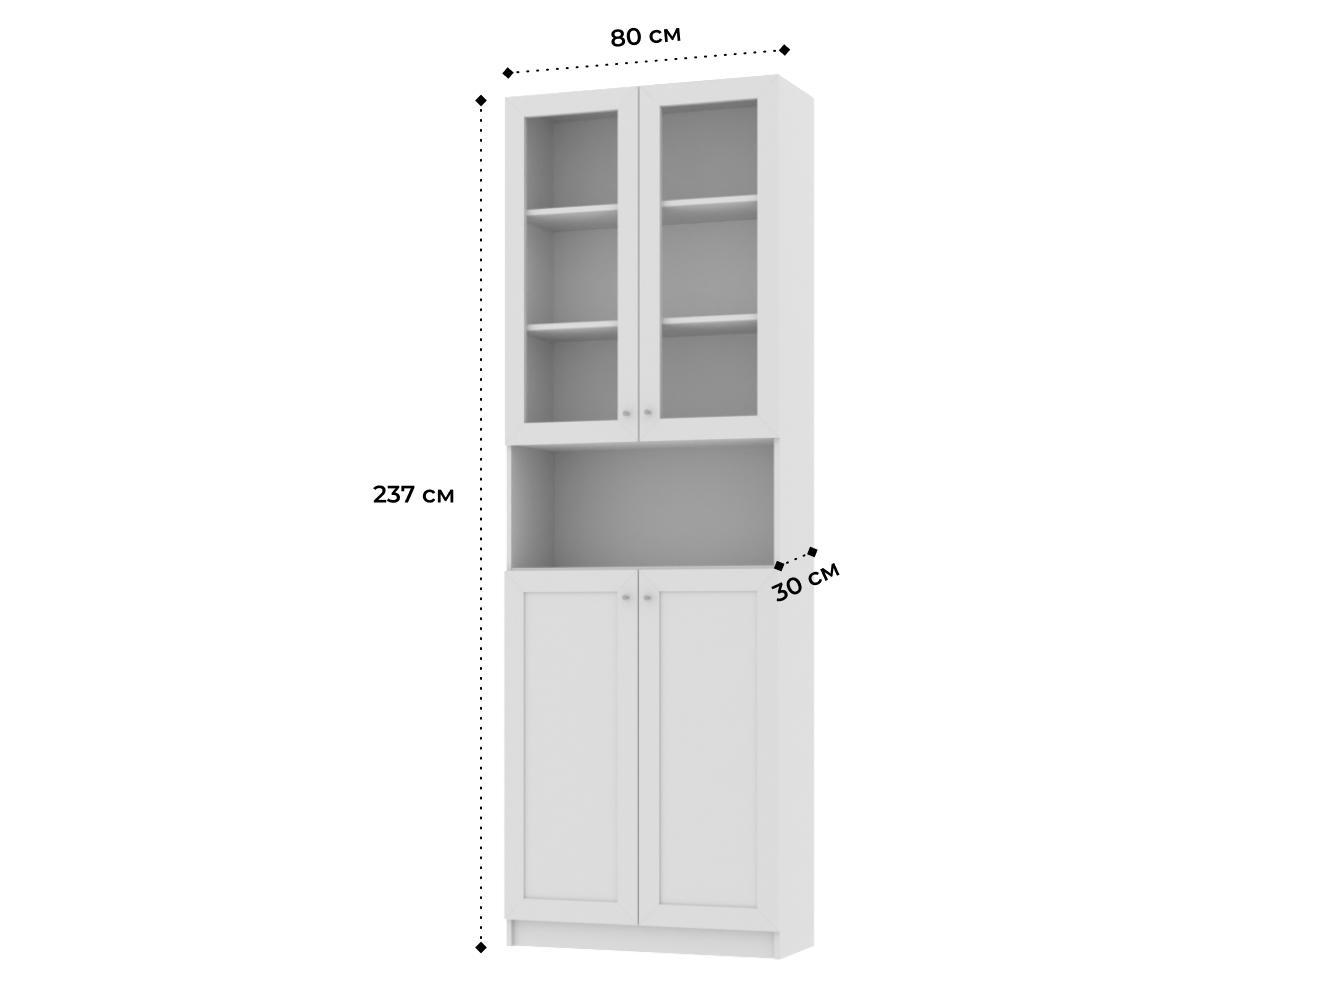  Книжный шкаф Билли 333 white ИКЕА (IKEA) изображение товара